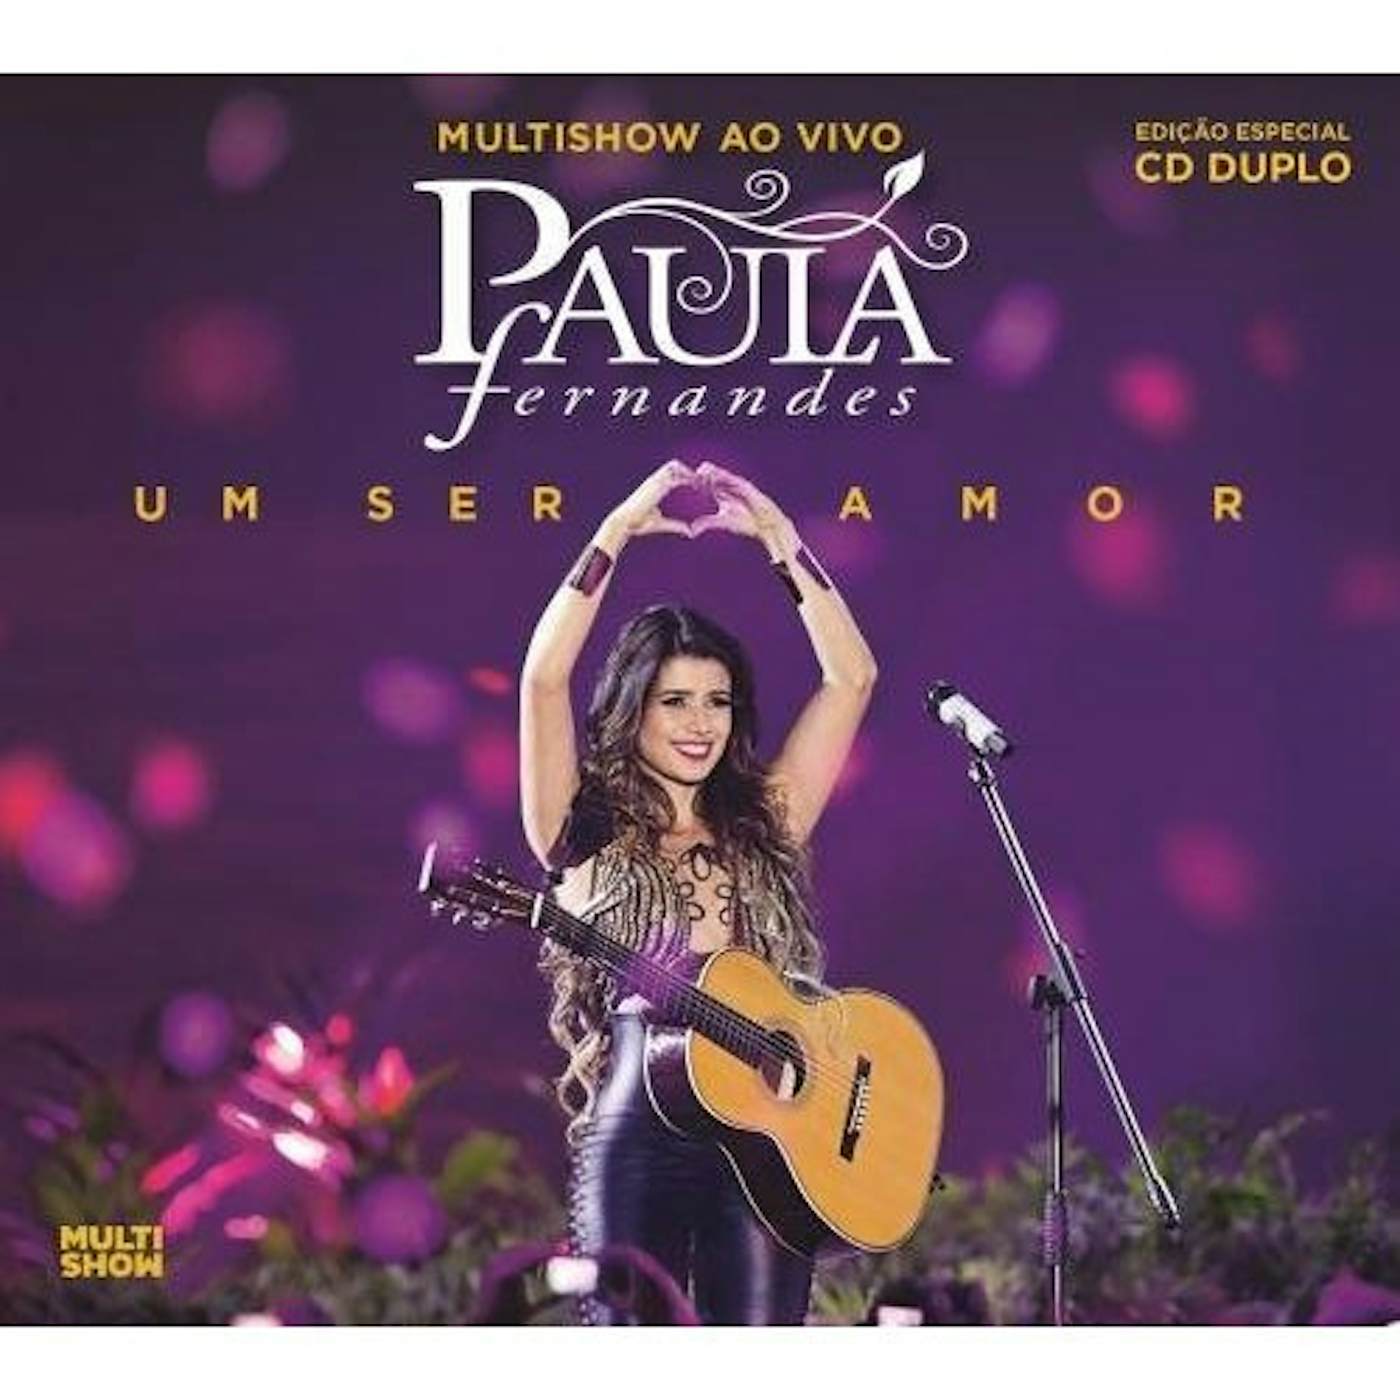 Paula Fernandes MULTISHOW AO VIVO CD